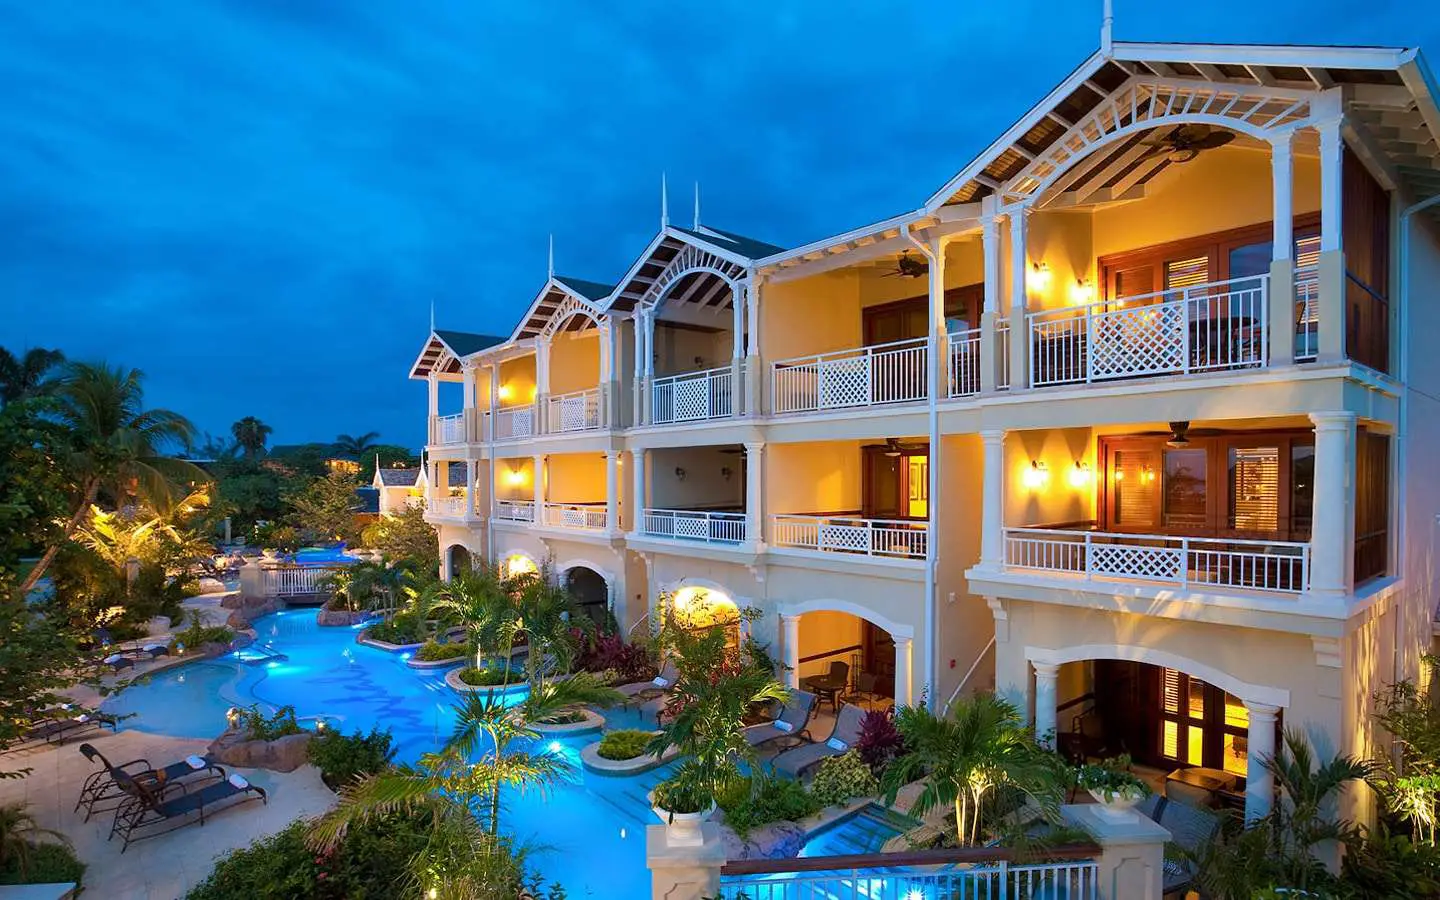 Sandals Royal Caribbean Hotel Review, Montego Bay, Jamaica